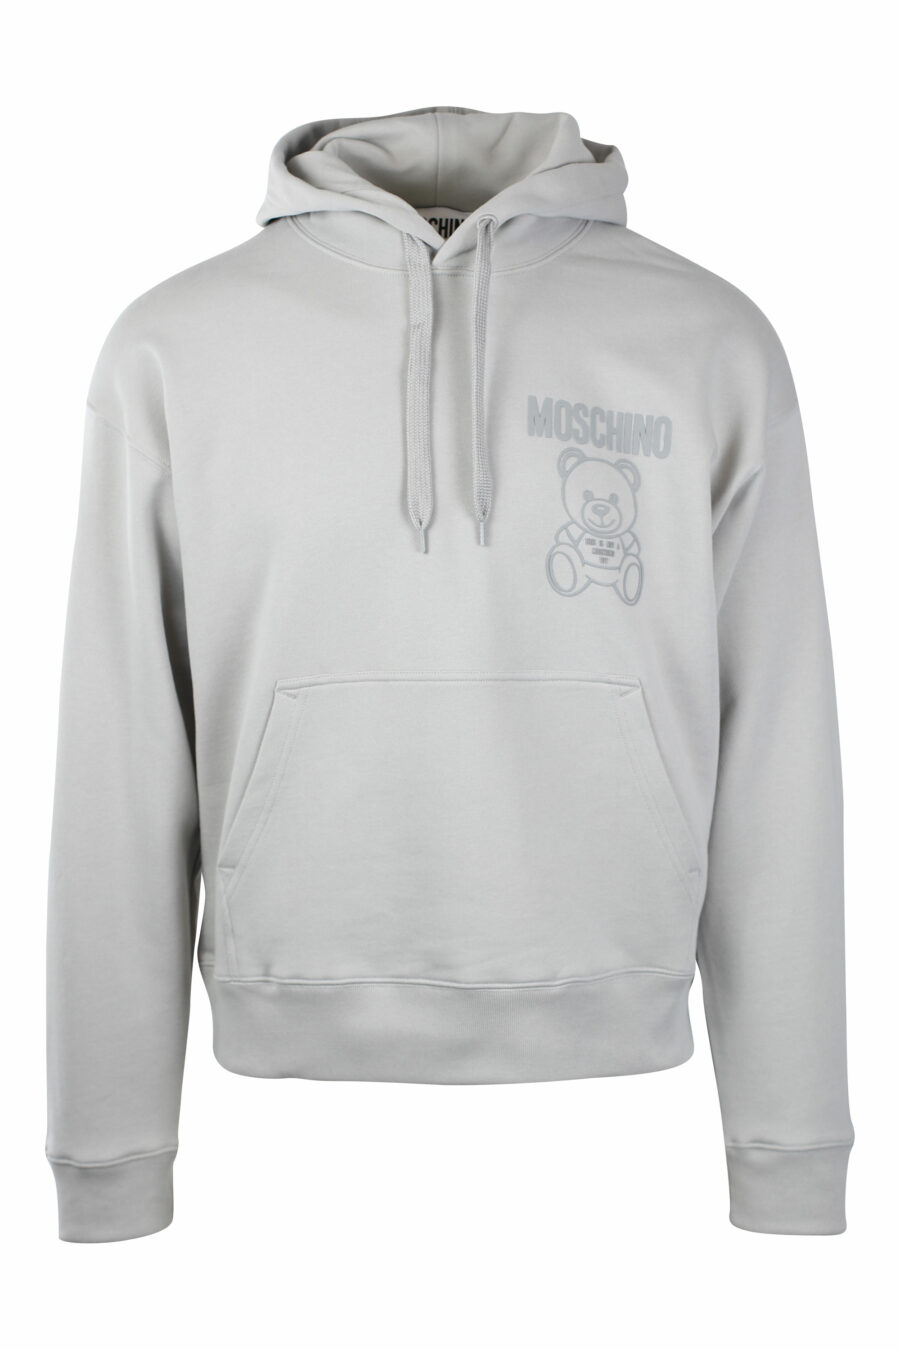 Grey hooded sweatshirt with monochrome bear mini logo - IMG 1401